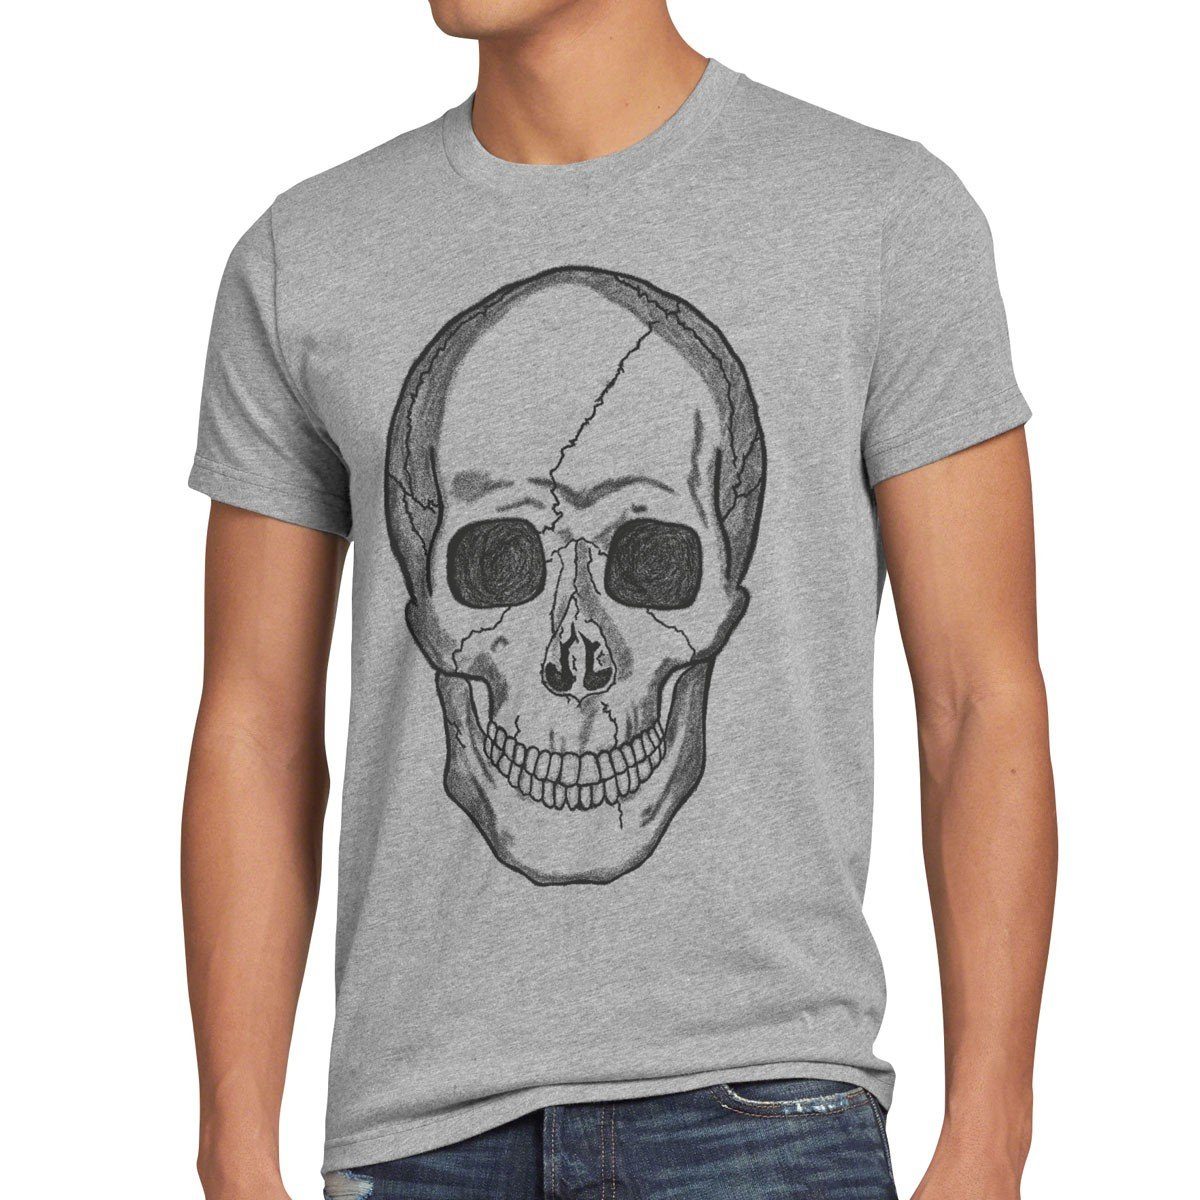 style3 Print-Shirt Herren T-Shirt Skull Totenkopf Harley Rocker Punk Tattoo gothic knochen biker us grau meliert